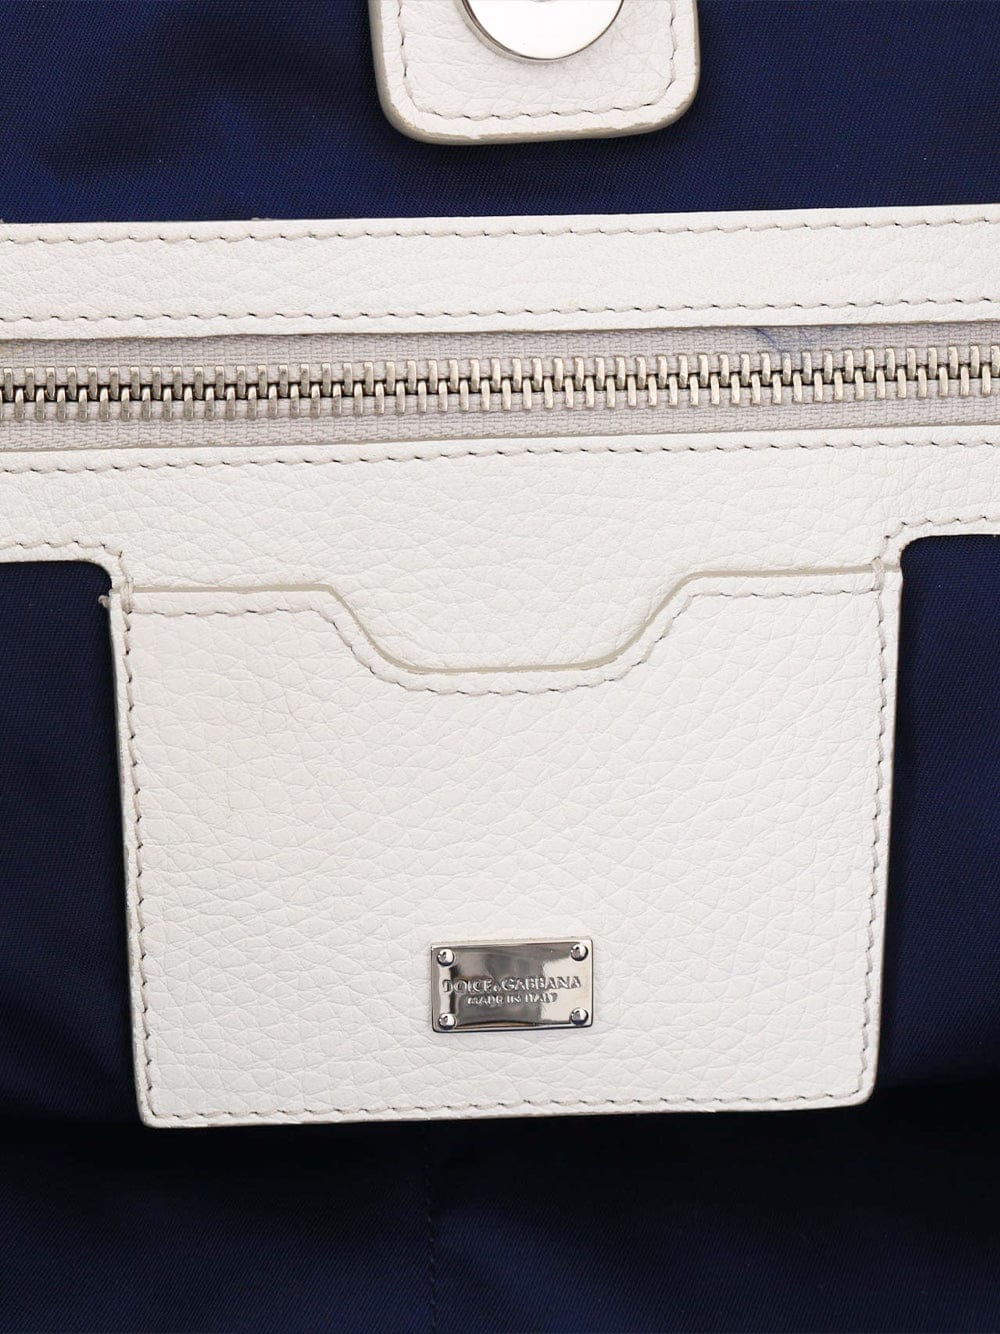 Dolce & Gabbana Designer's Patch Beatrice Shopping Bag